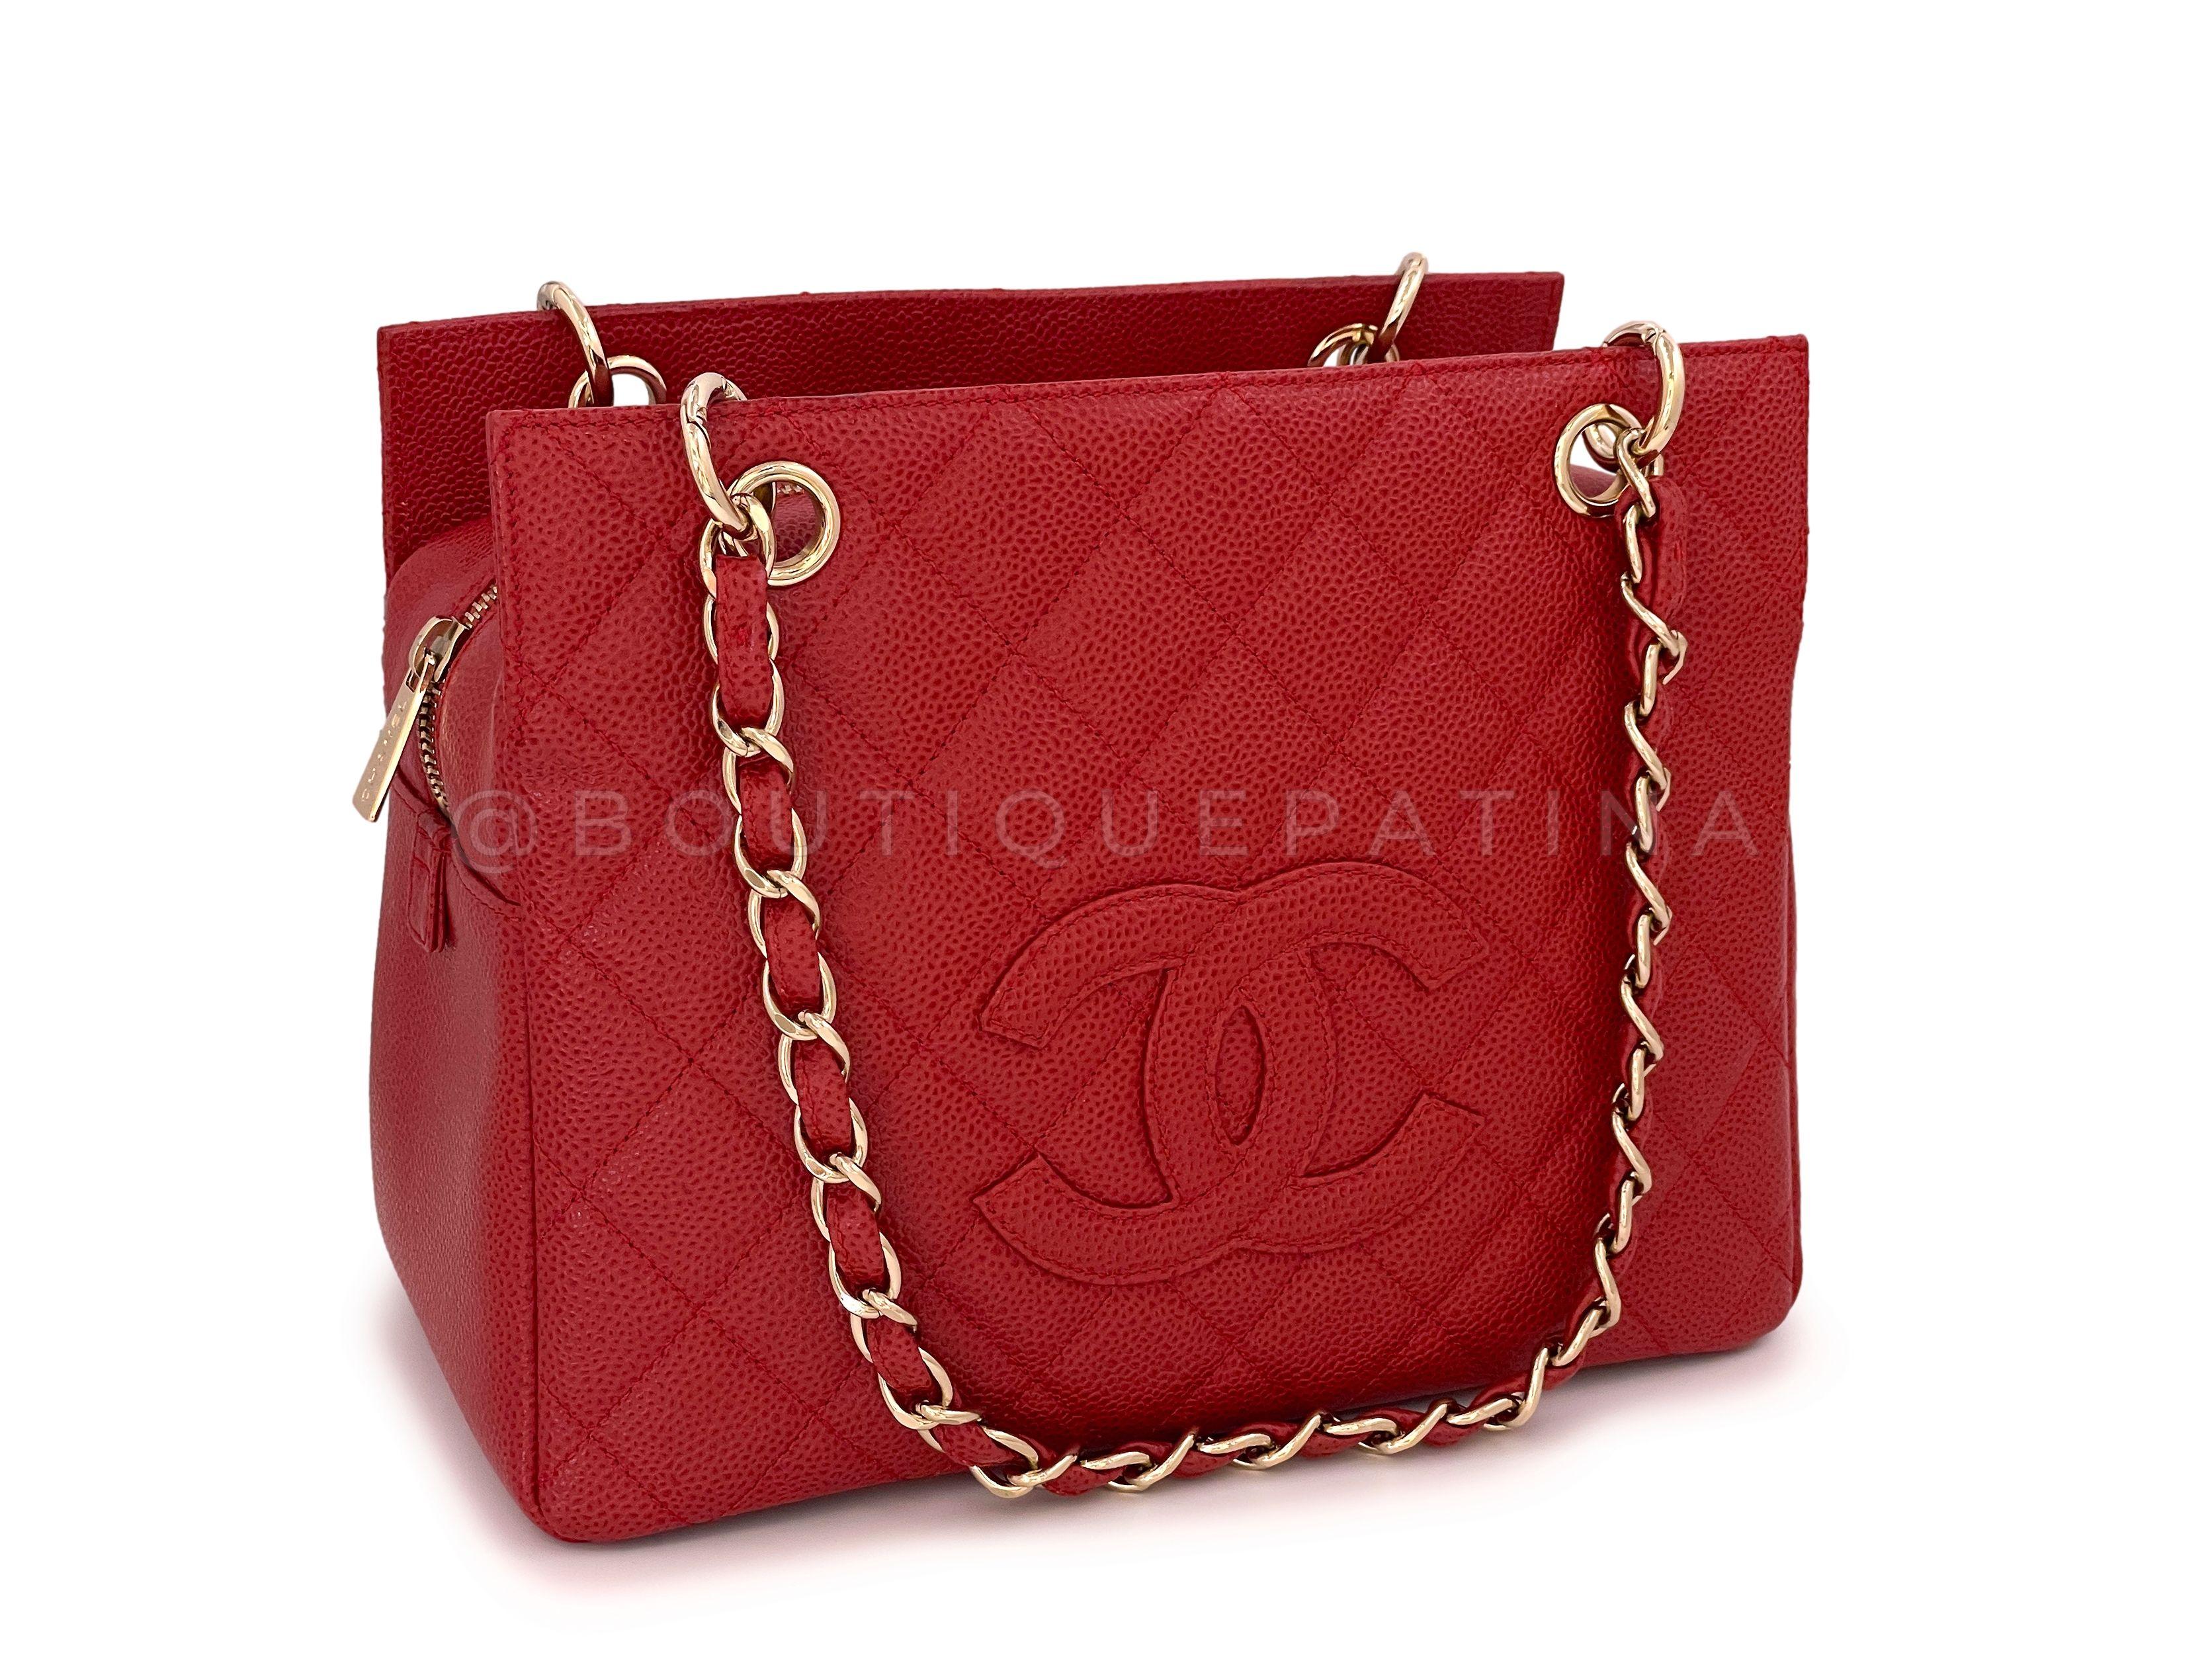 Chanel Ptt - For Sale on 1stDibs  story leather ptt, chanel ptt